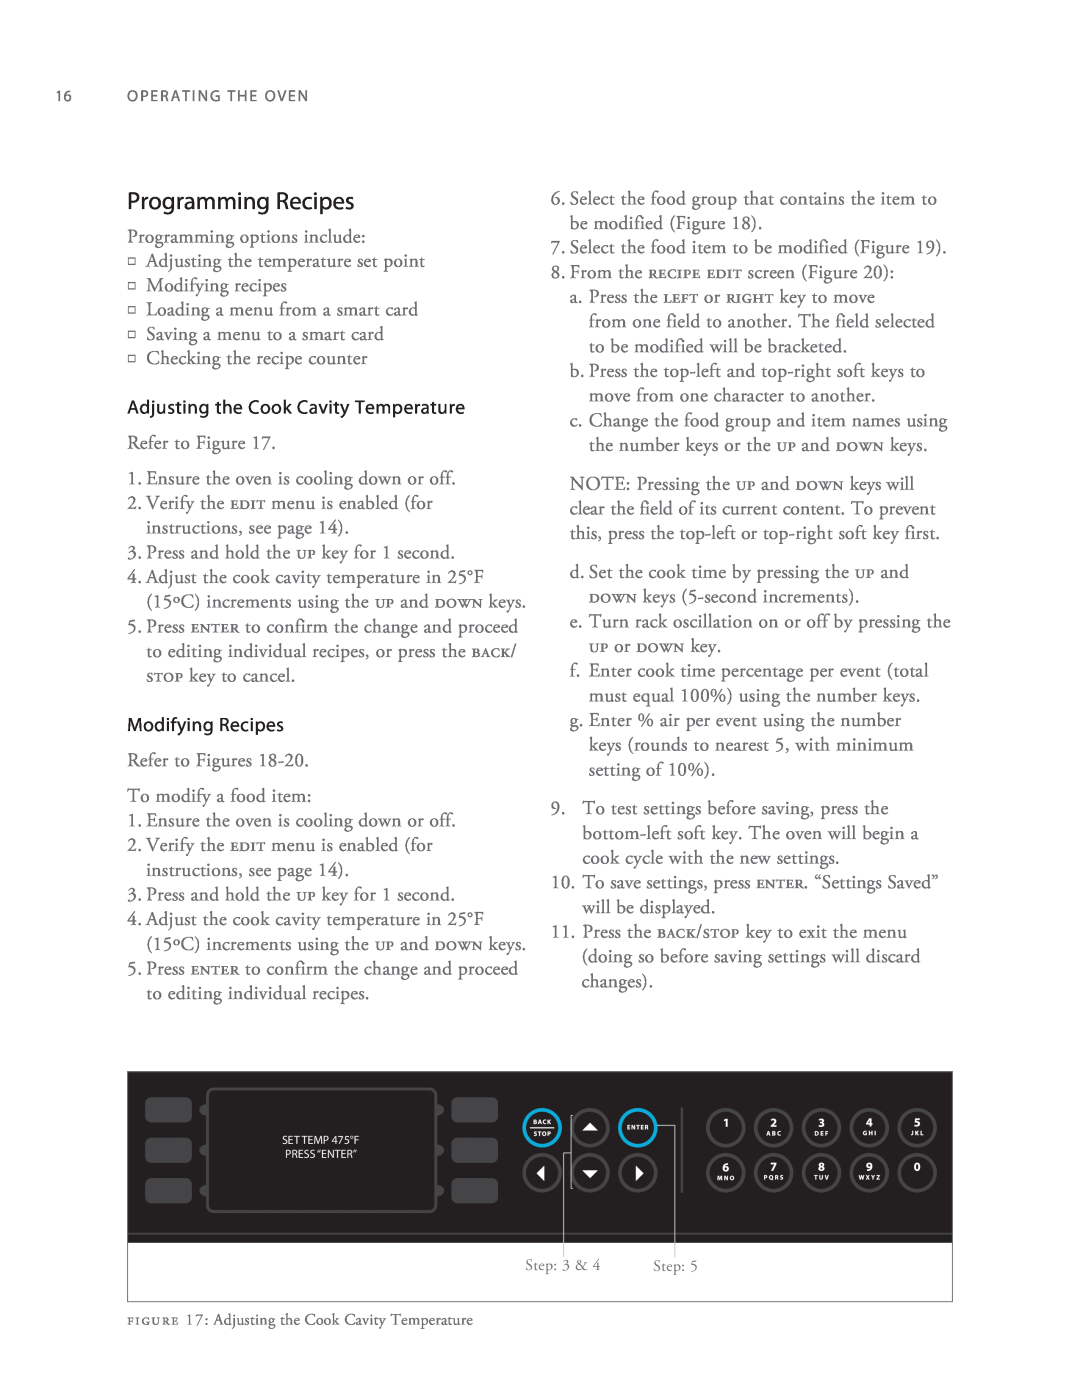 Turbo Chef Technologies 2TM manual Programming Recipes 